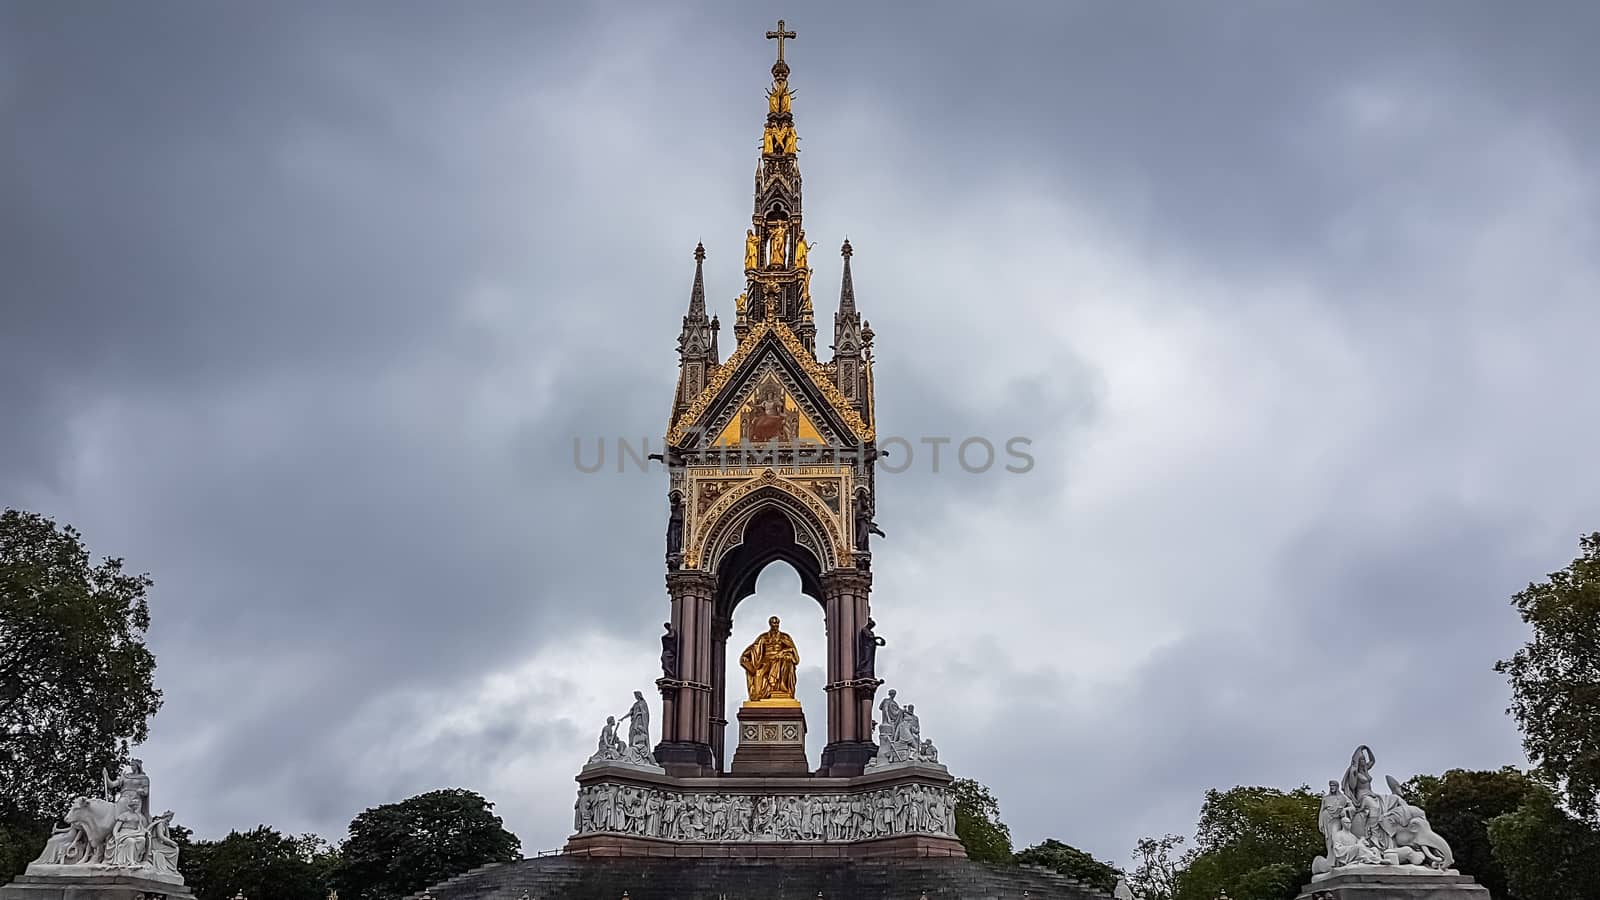 London, UK - July 8, 2020: The Prince Albert memorial in Hyde park by DamantisZ